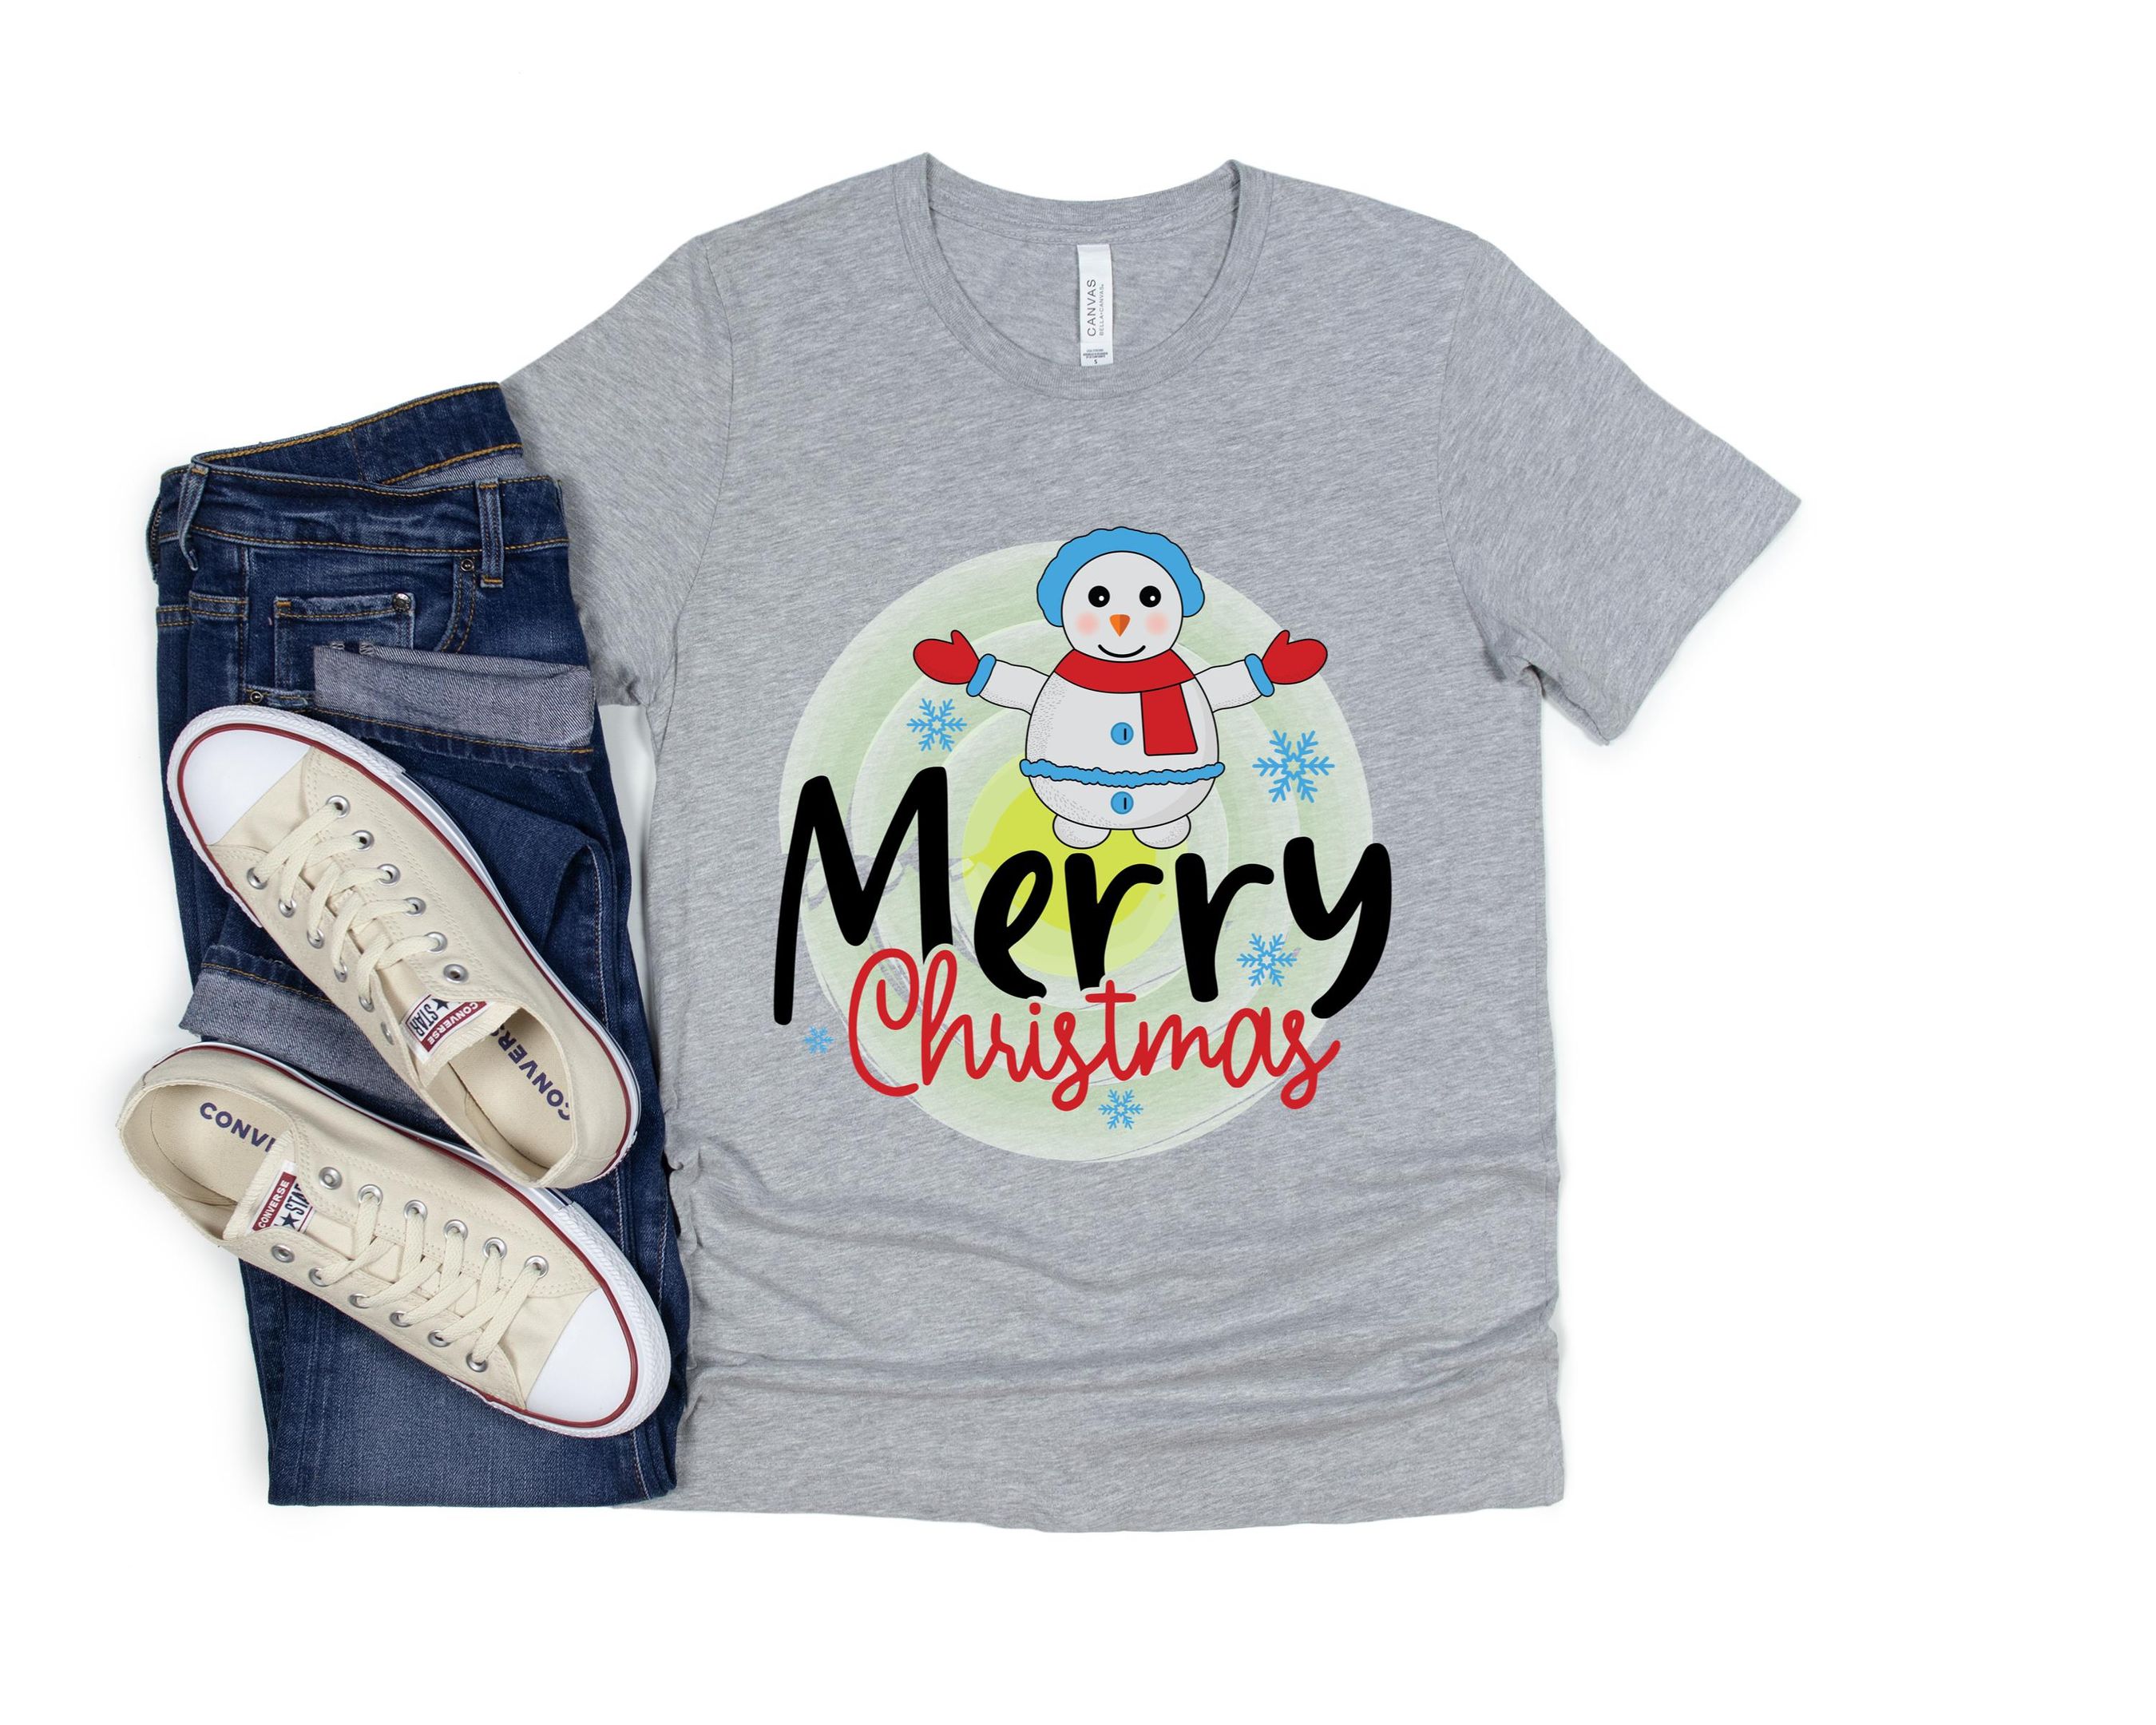 Merry Christmas Shirt, Winter Shirt, Frosty Shirt, Snowman Shirt, Christmas Snowman Shirt, Frosty The Snowman, Cozy Season Shirt